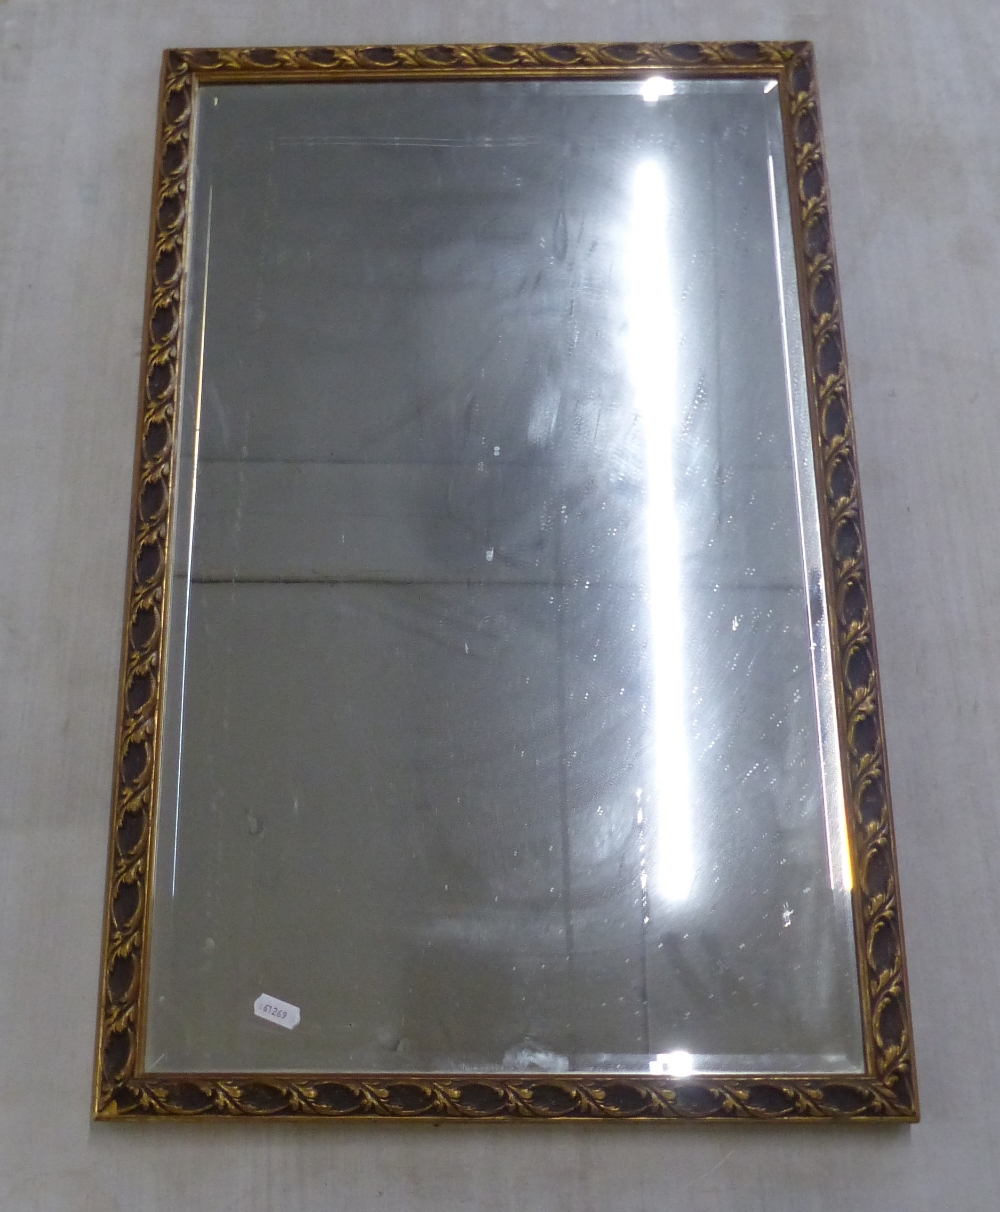 Rectungular Gilt Framed Modern Hall Mirror with Leaf Pattern Frame. Height: 70cm Width: 44.5cm